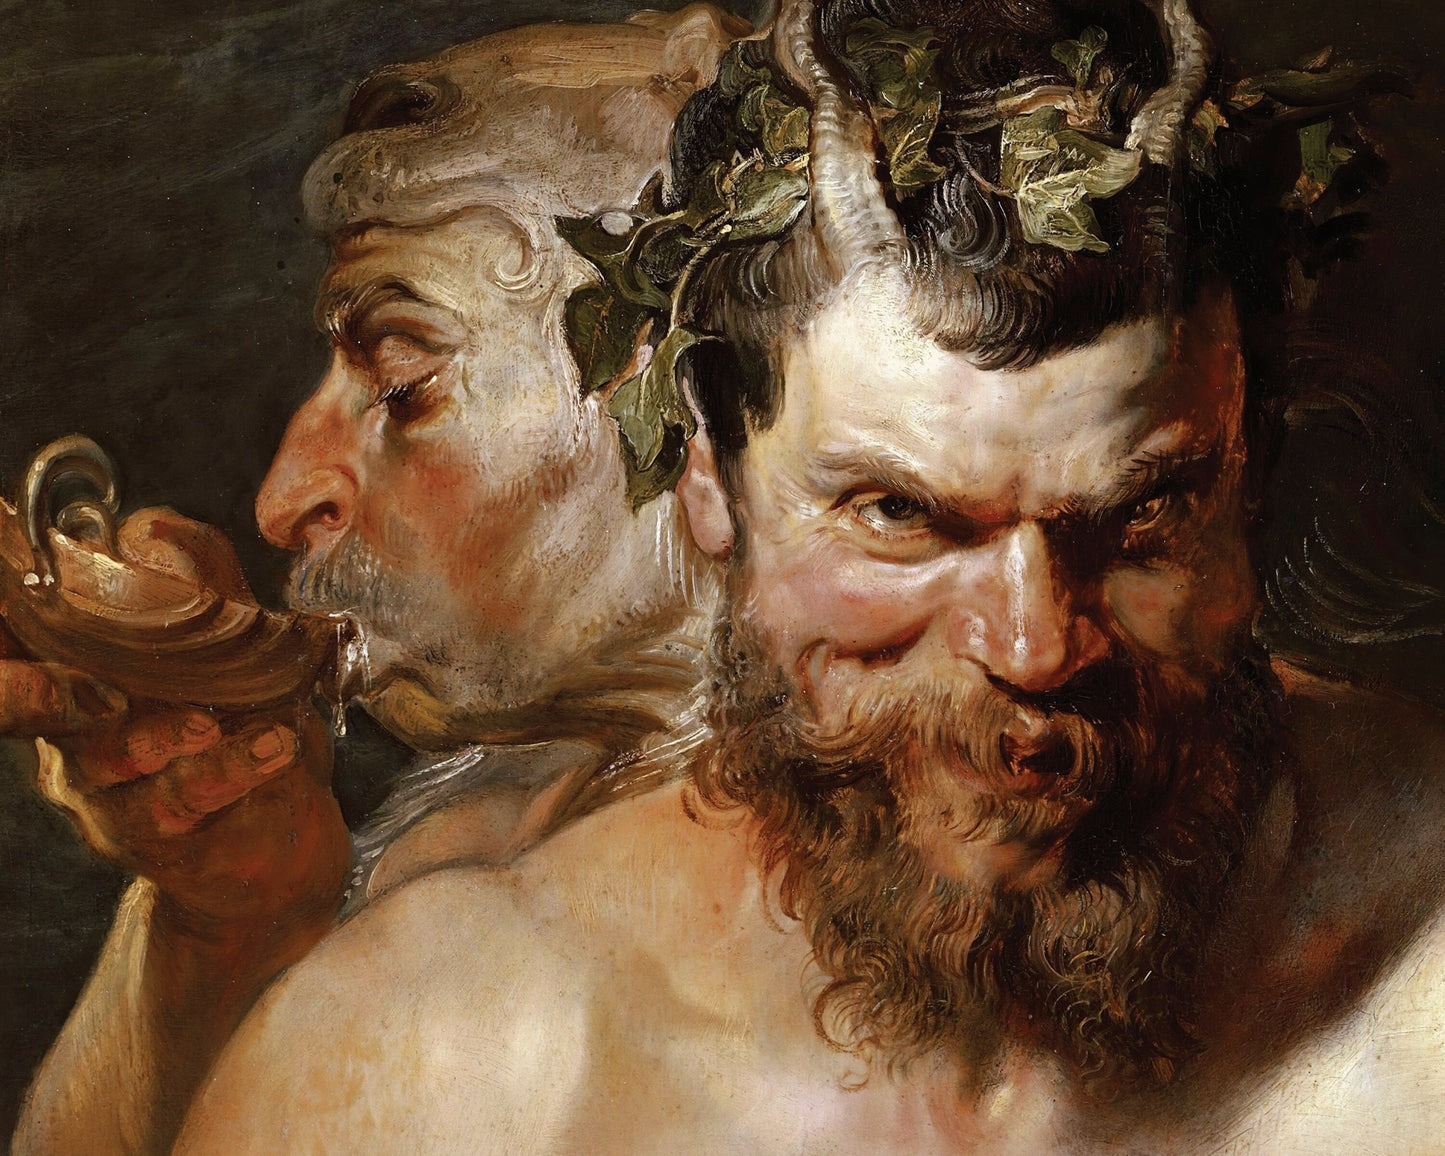 Peter Paul Rubens "Two Satyrs" (c.1618 - 1619) - Mabon Gallery